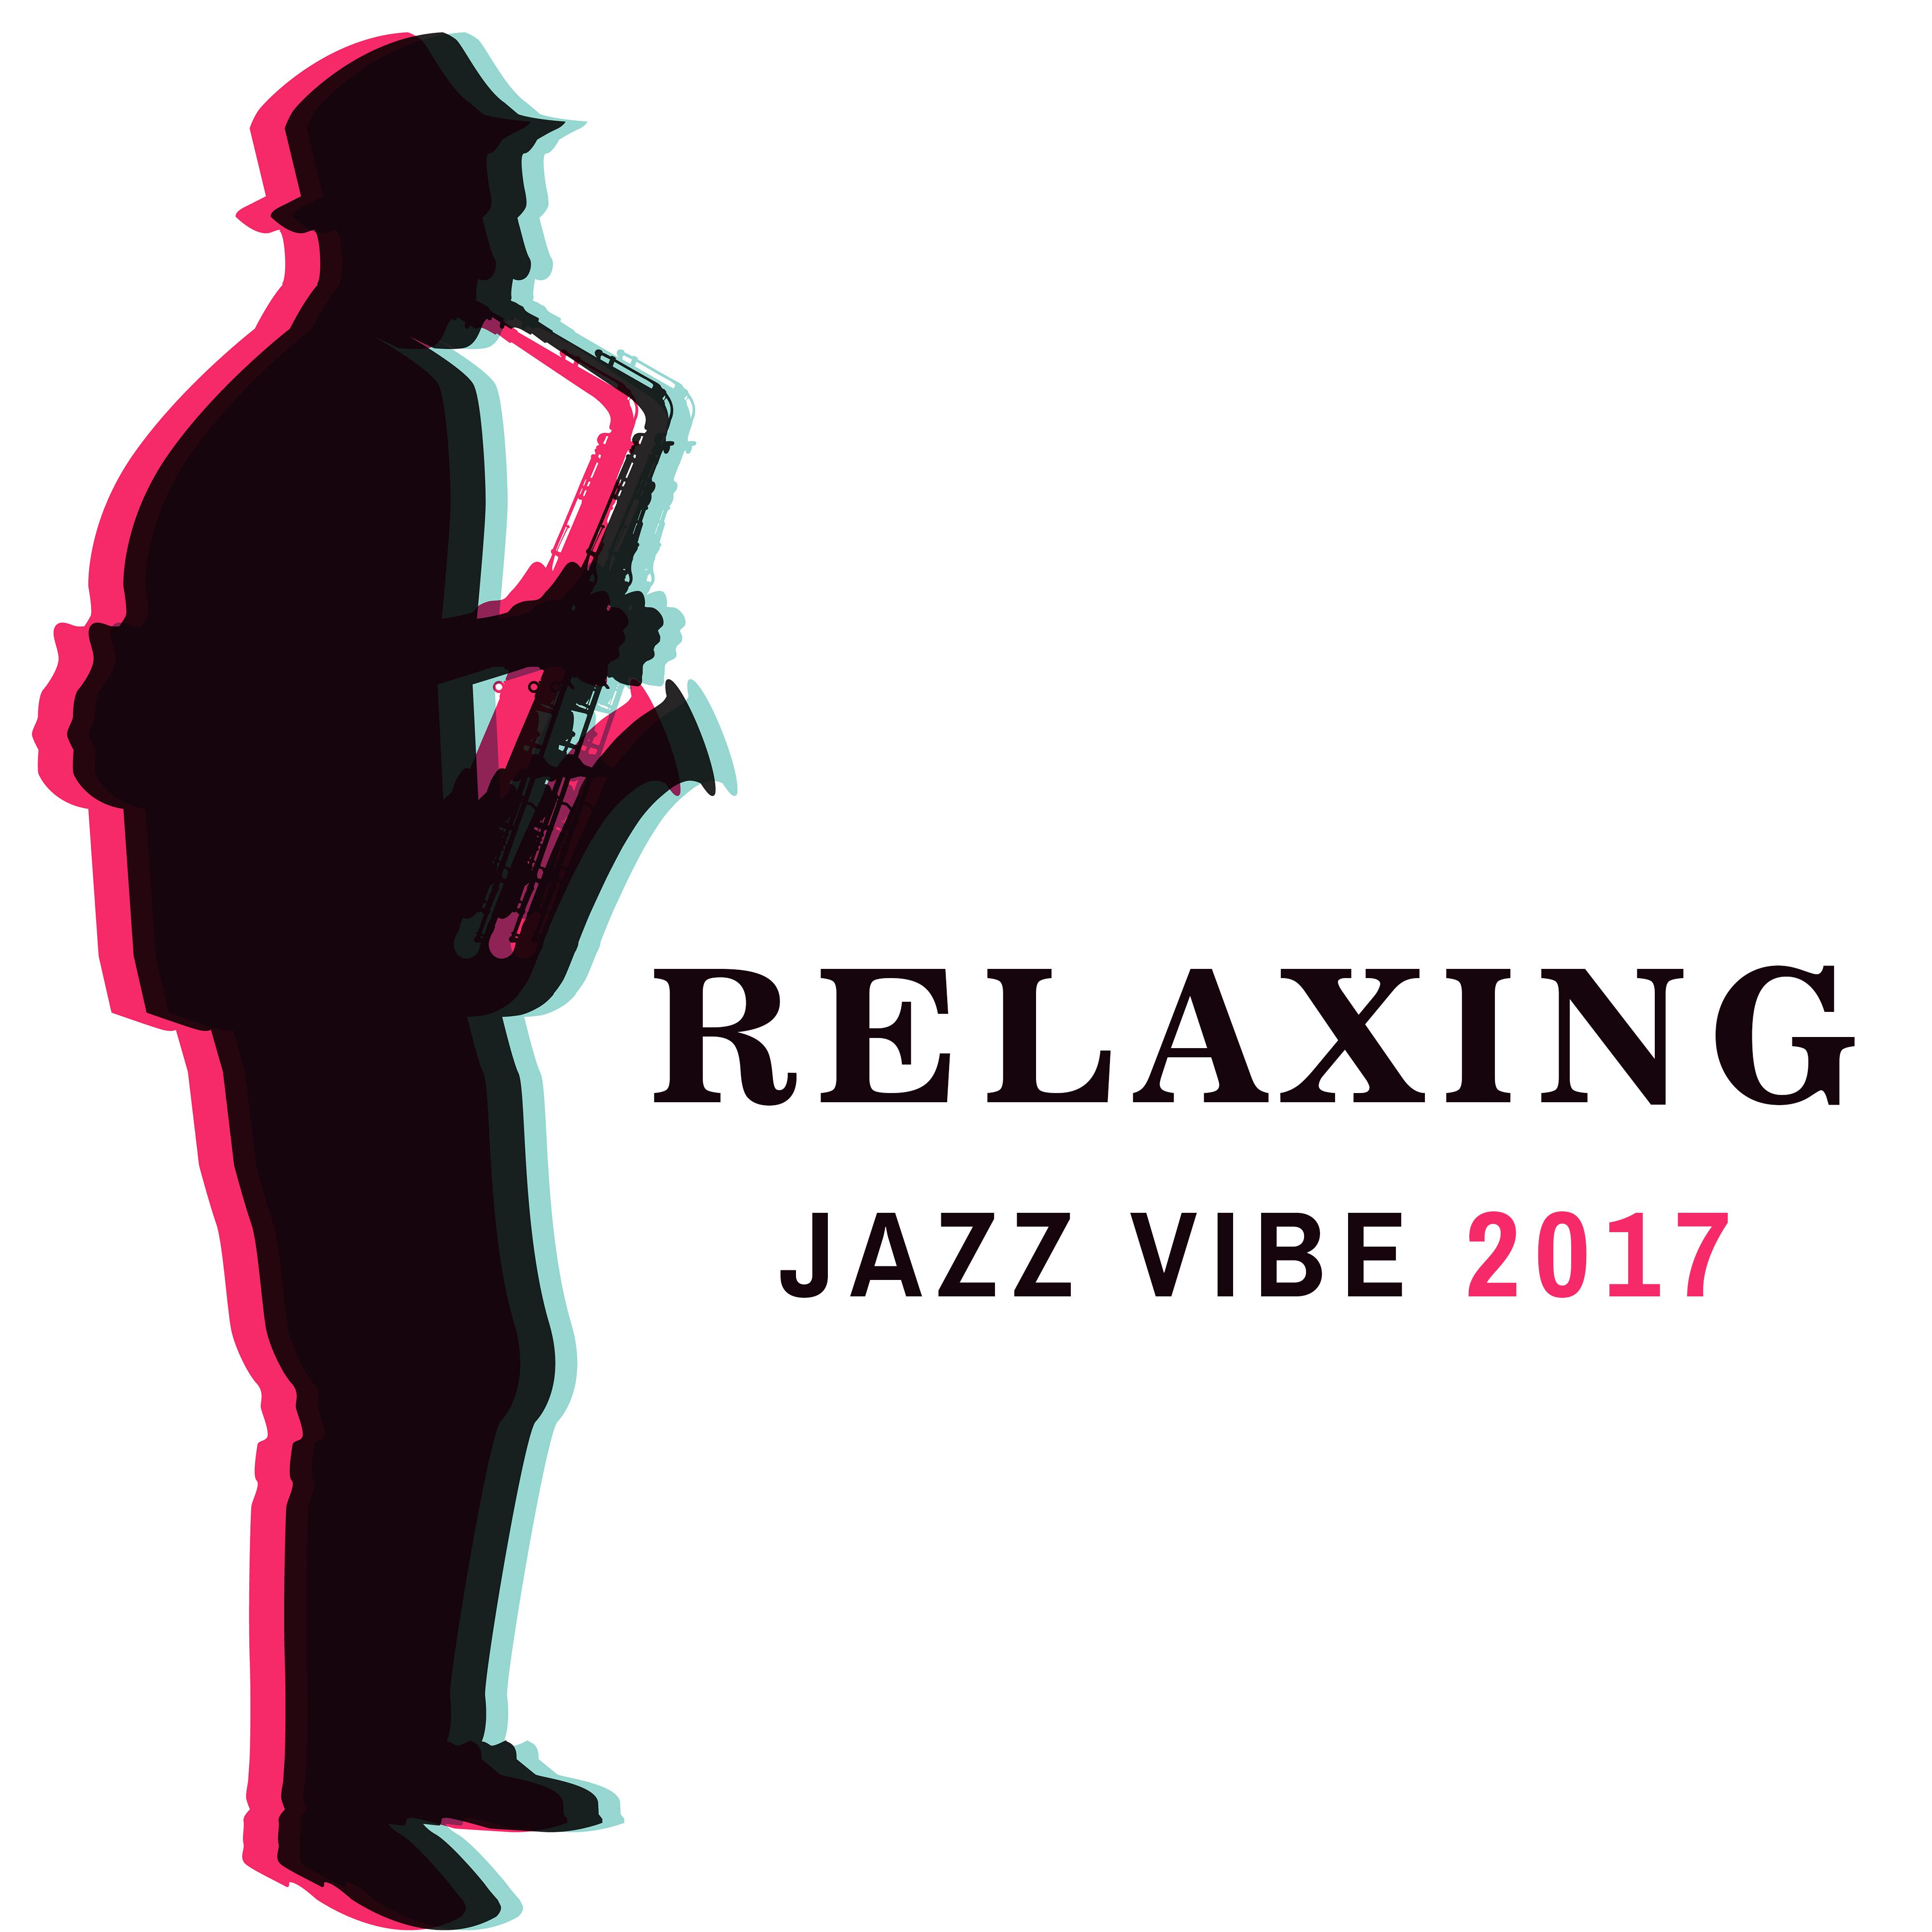 Relaxing Jazz Vibe 2017